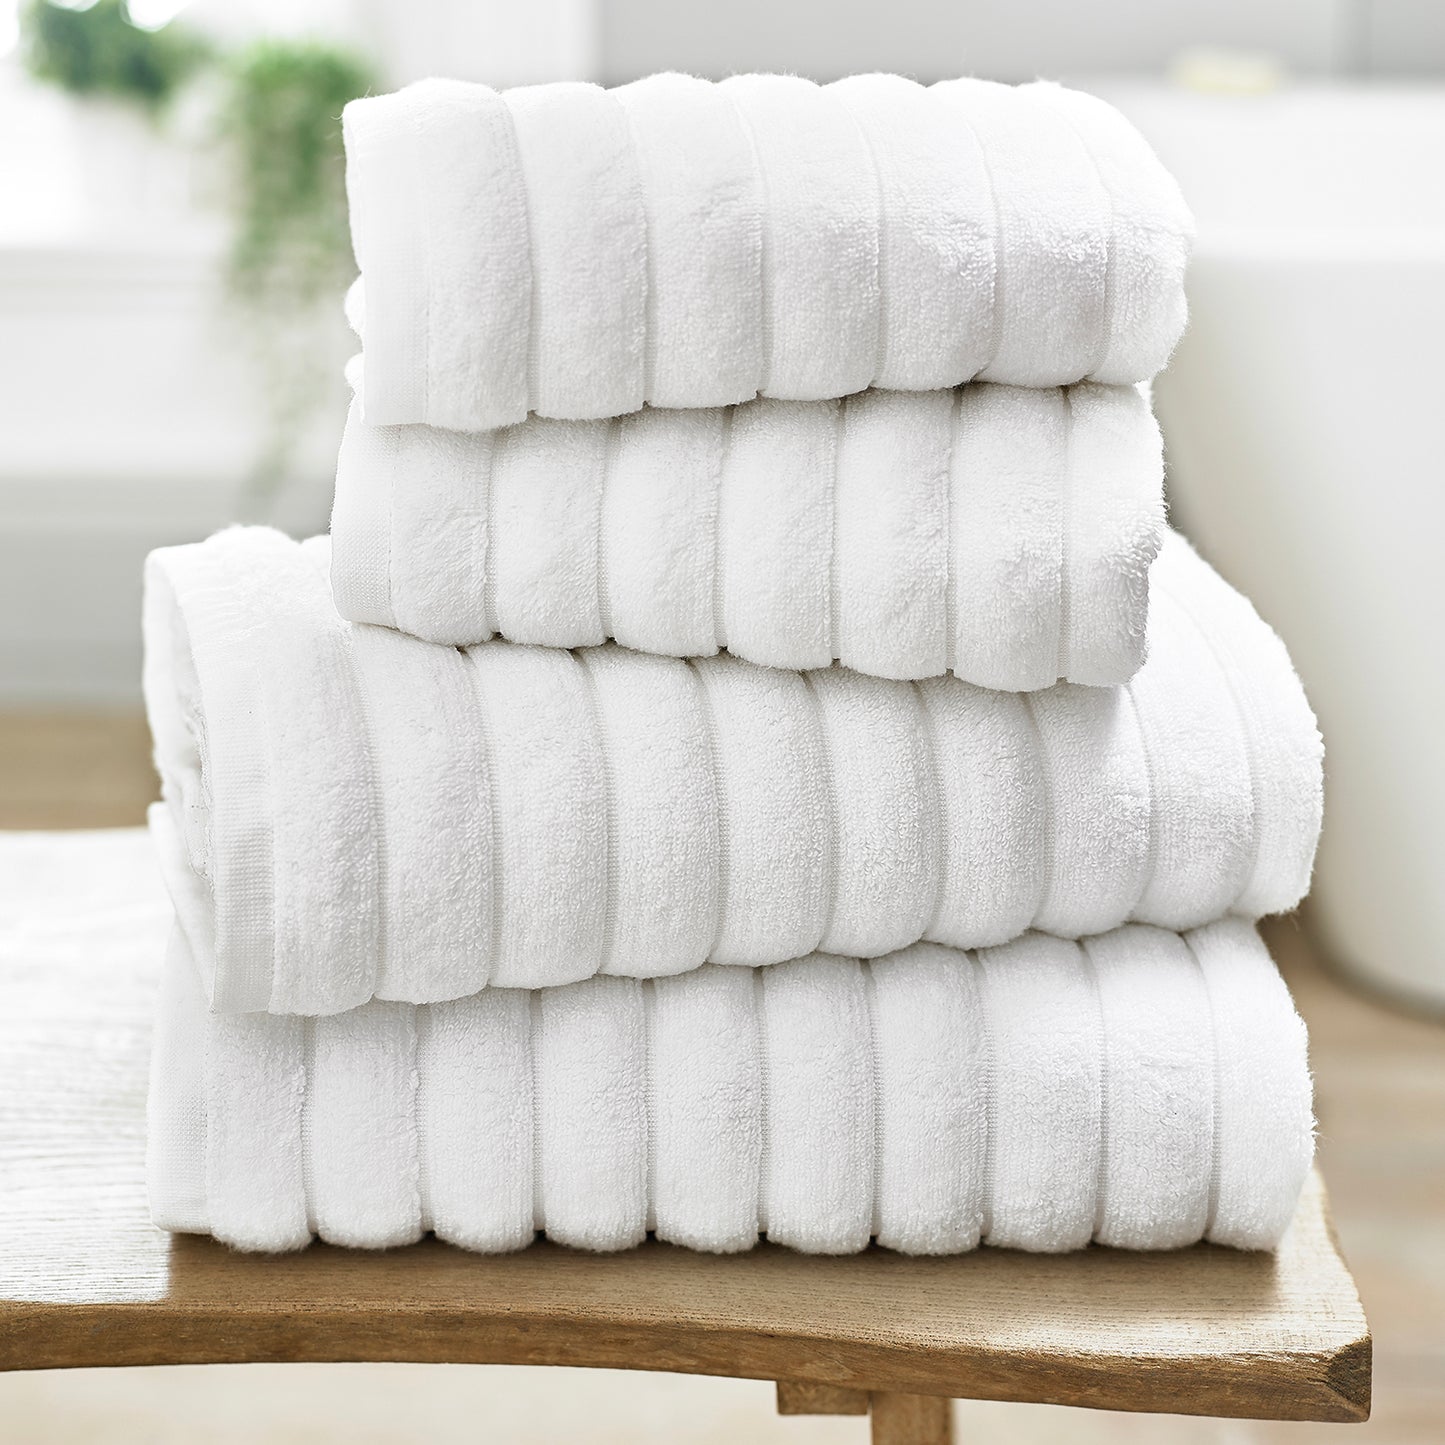 The Lyndon Company Ribbleton 700gsm Zero Twist White Towels